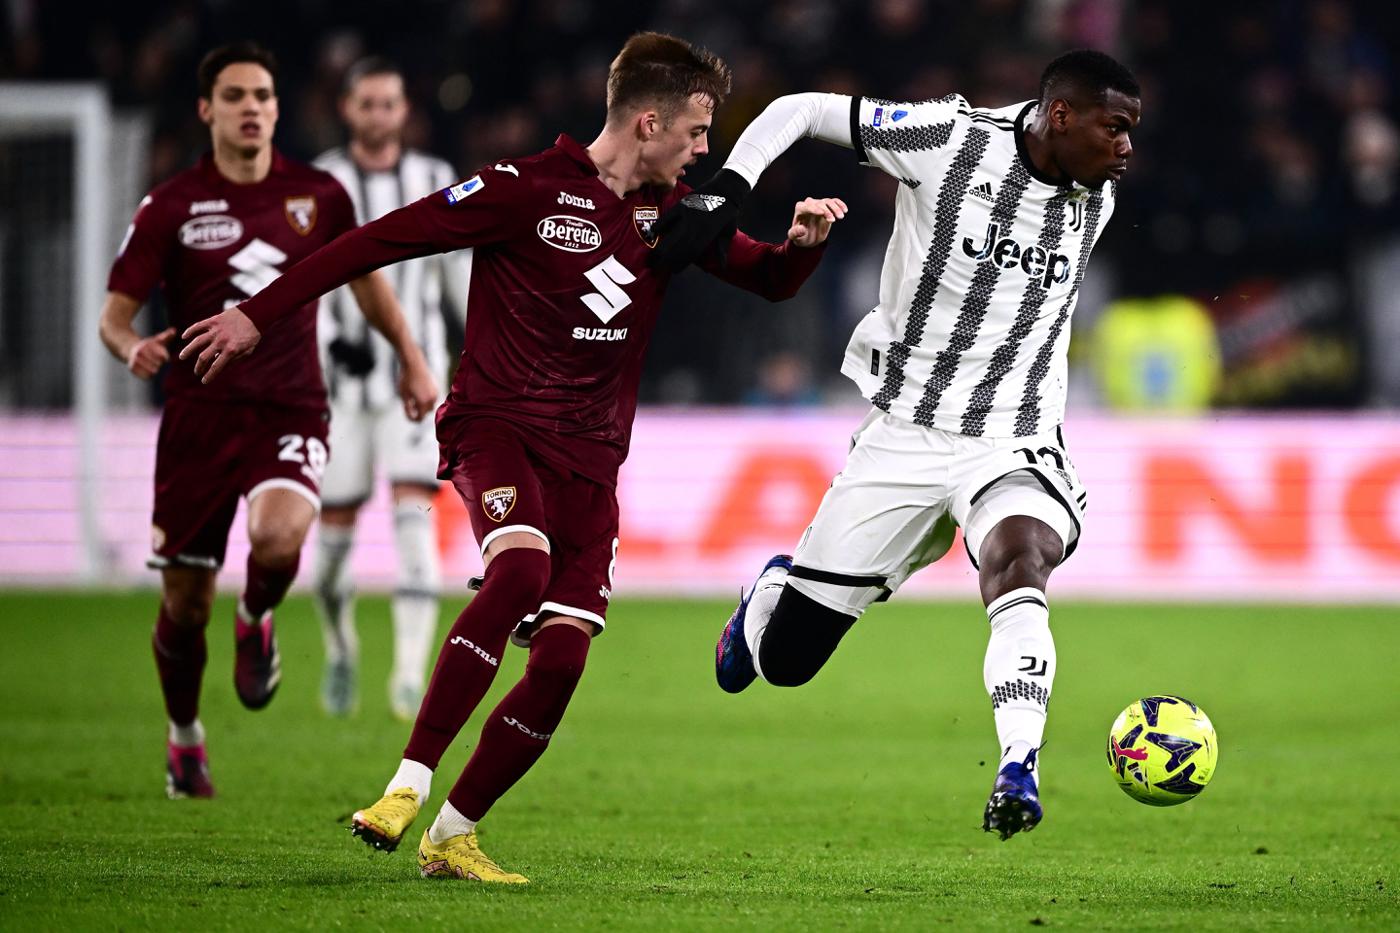 Juventus - Torino - 4:2. Italian Championship, round 24. Match review,  statistics (Feb. 28, 2023) —